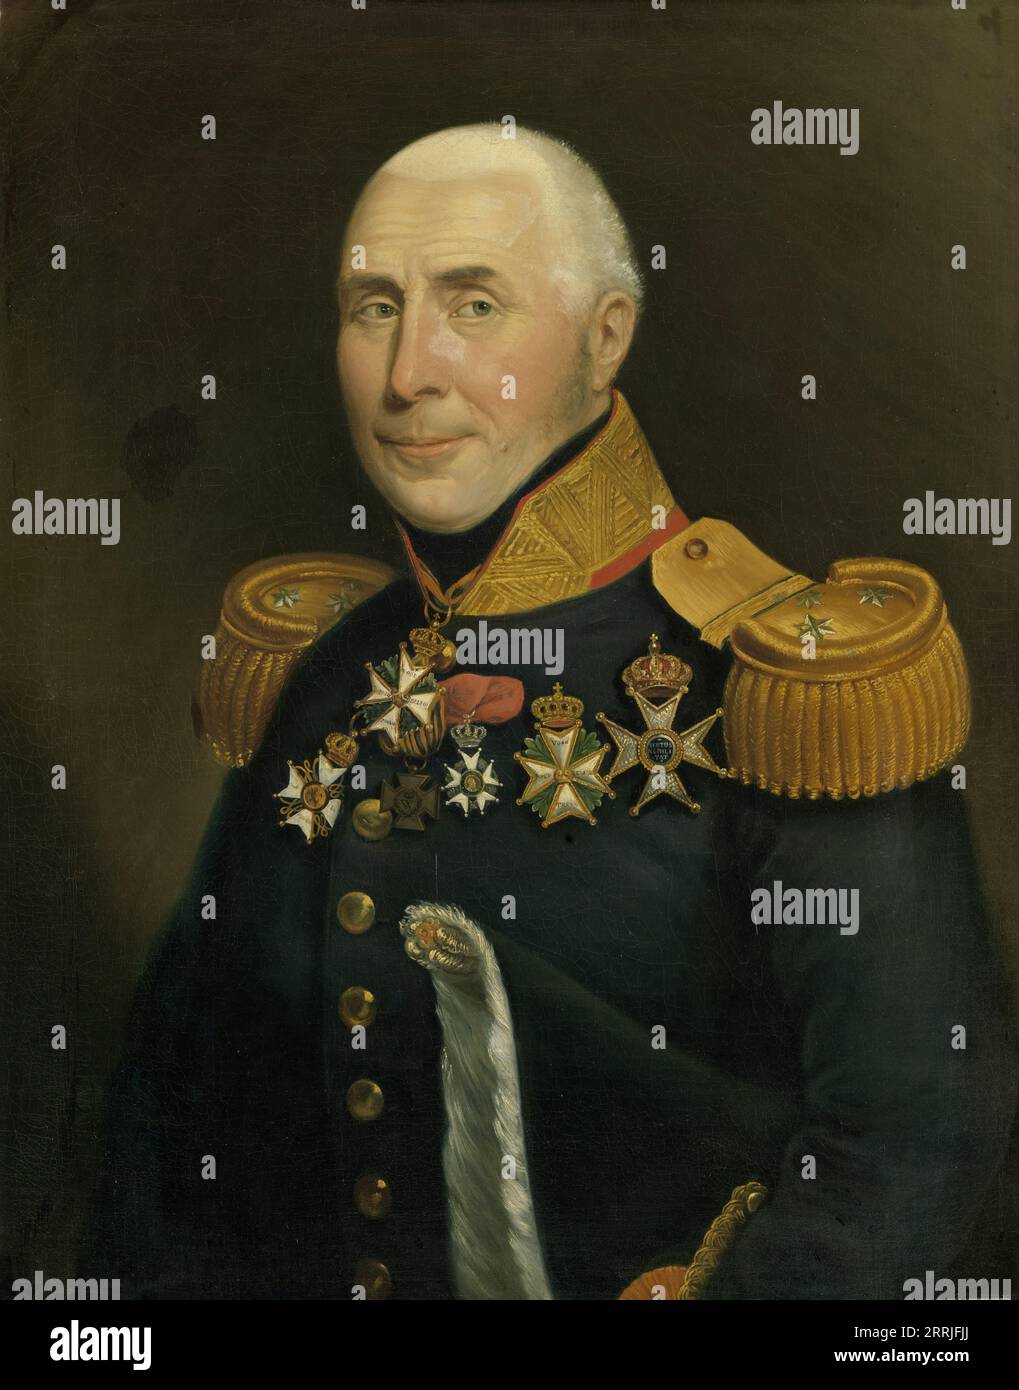 Gijsbertus Martinus Cort Heyligers (1770-1849). Lieutenant General in the Infantry, 1831. Stock Photo